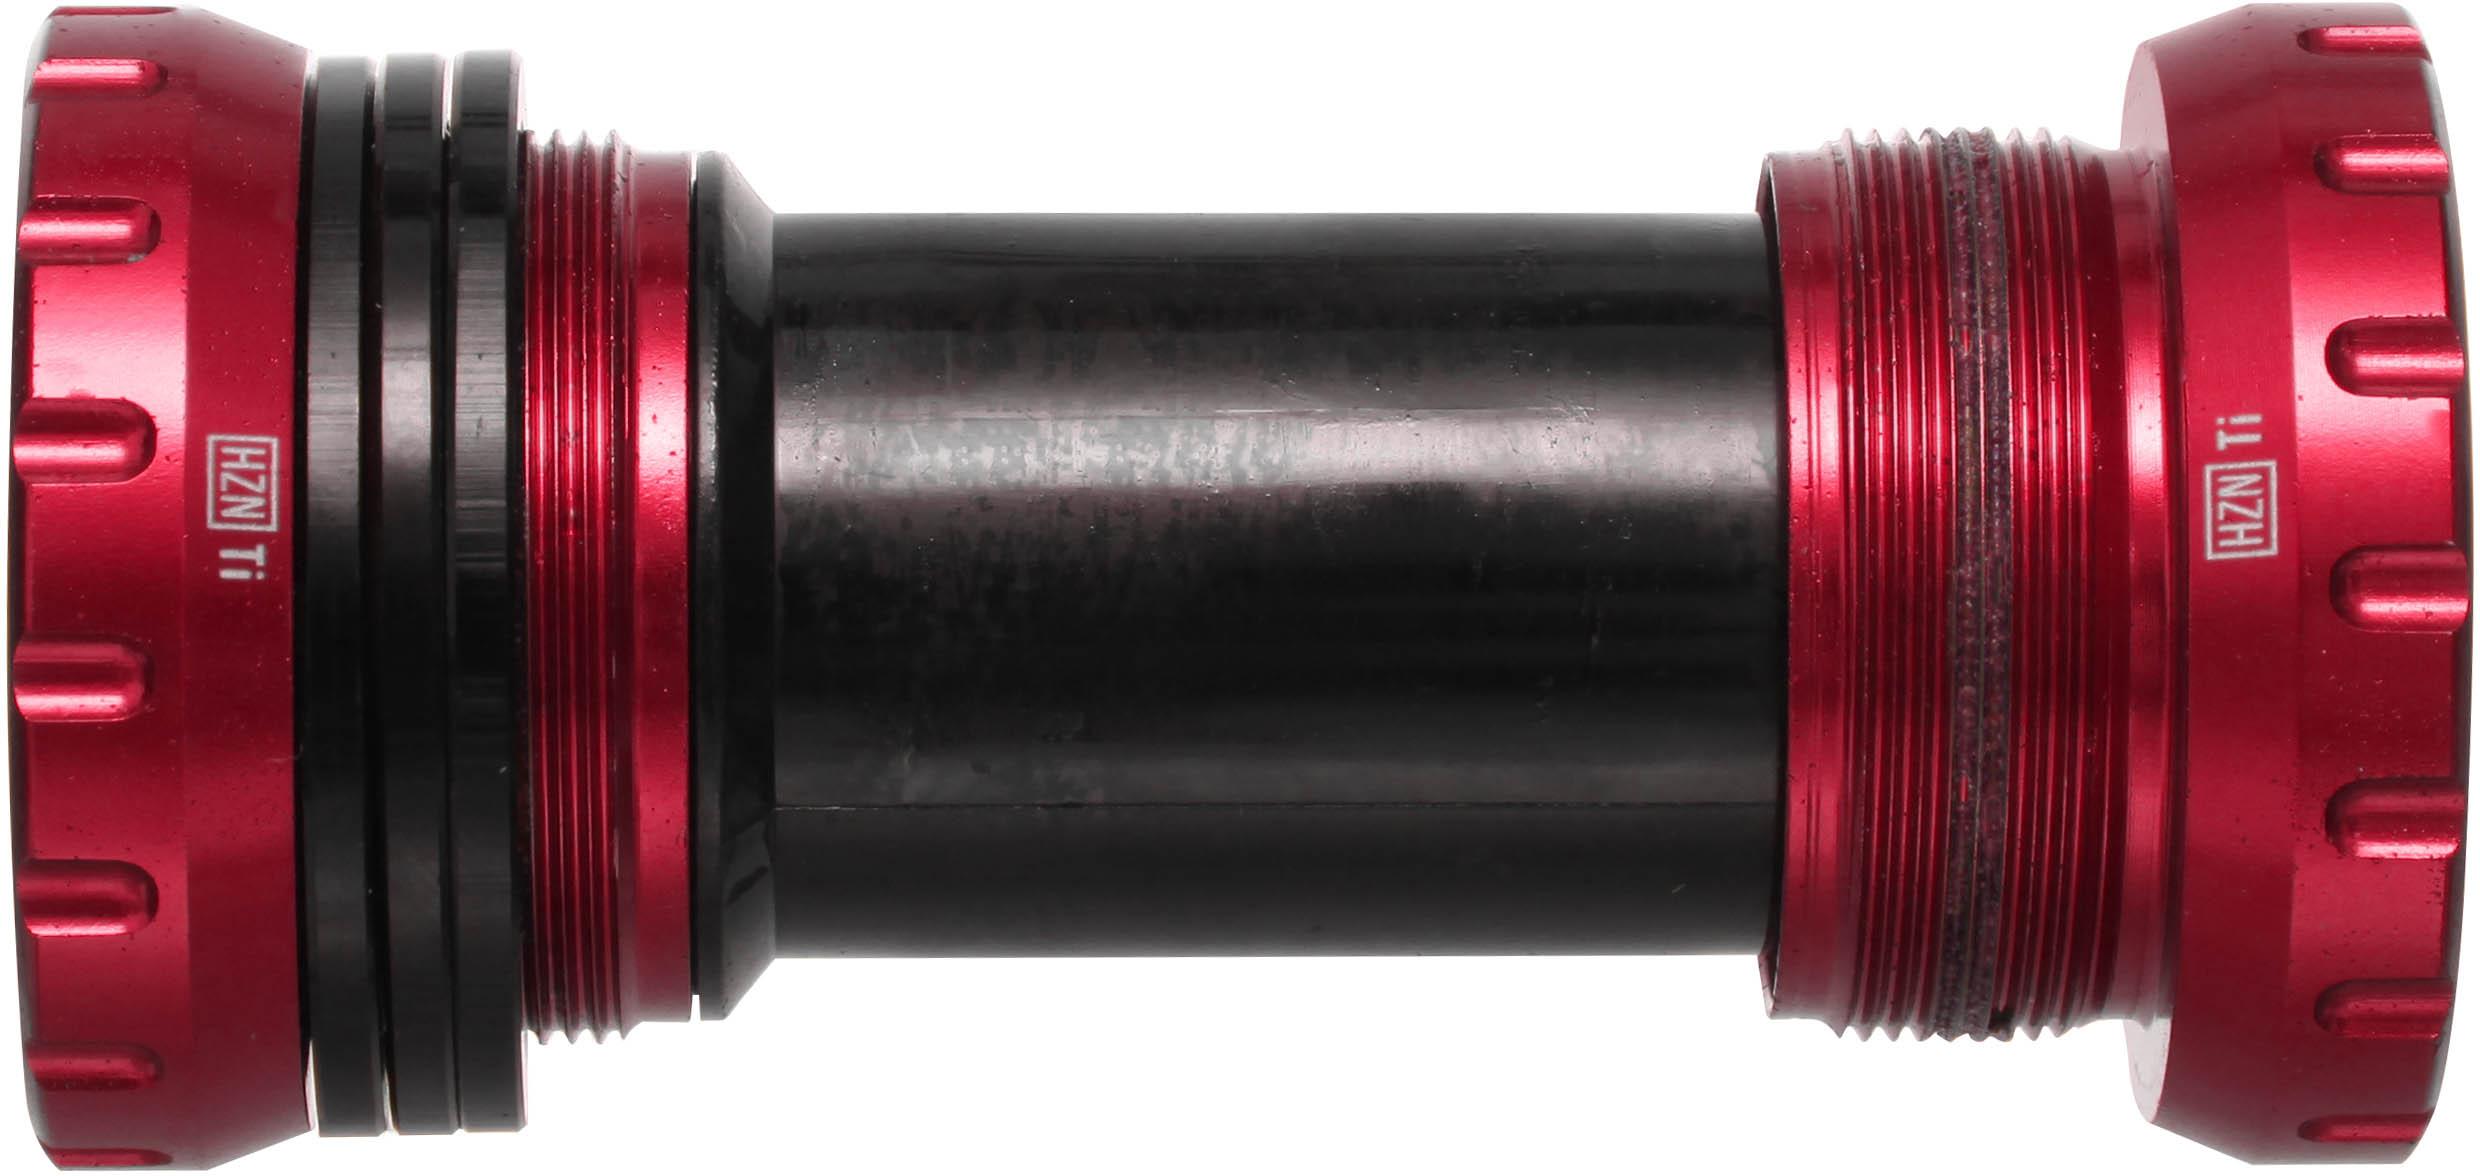 Nukeproof Horizon Shimano Bottom Bracket (24mm)  Red